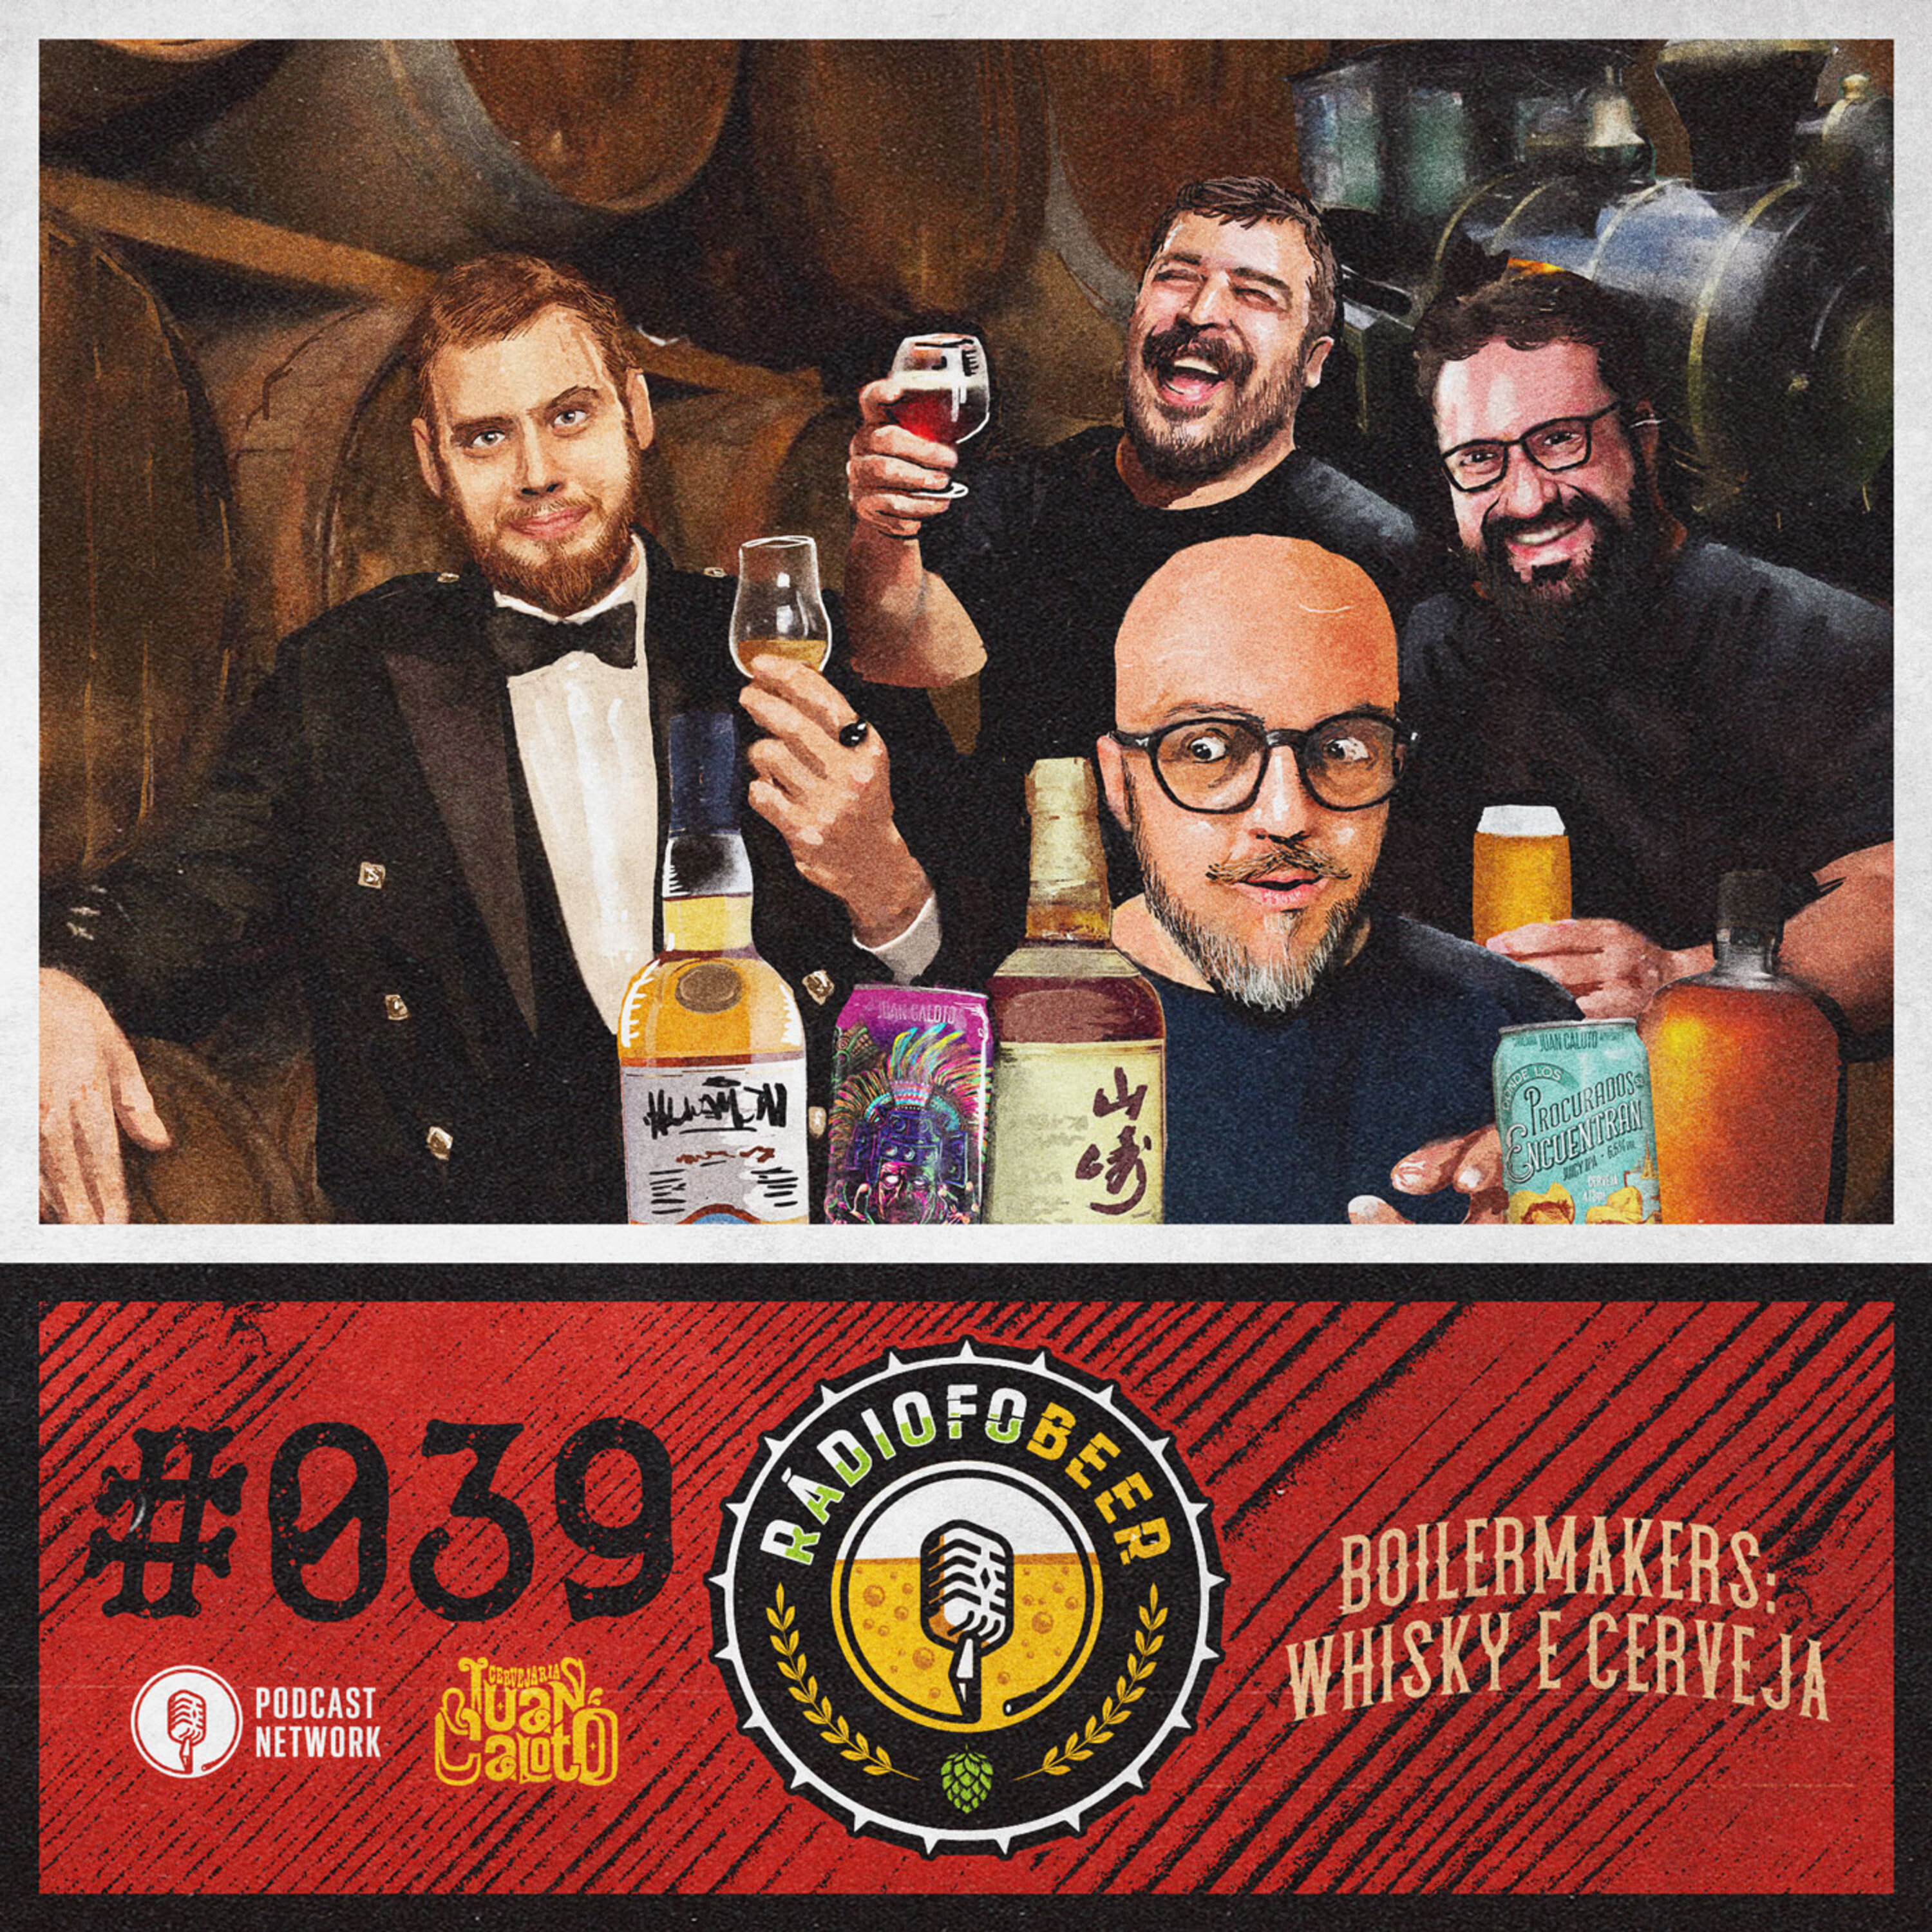 RádiofoBeer #039 - Boilermakers: whisky e cerveja